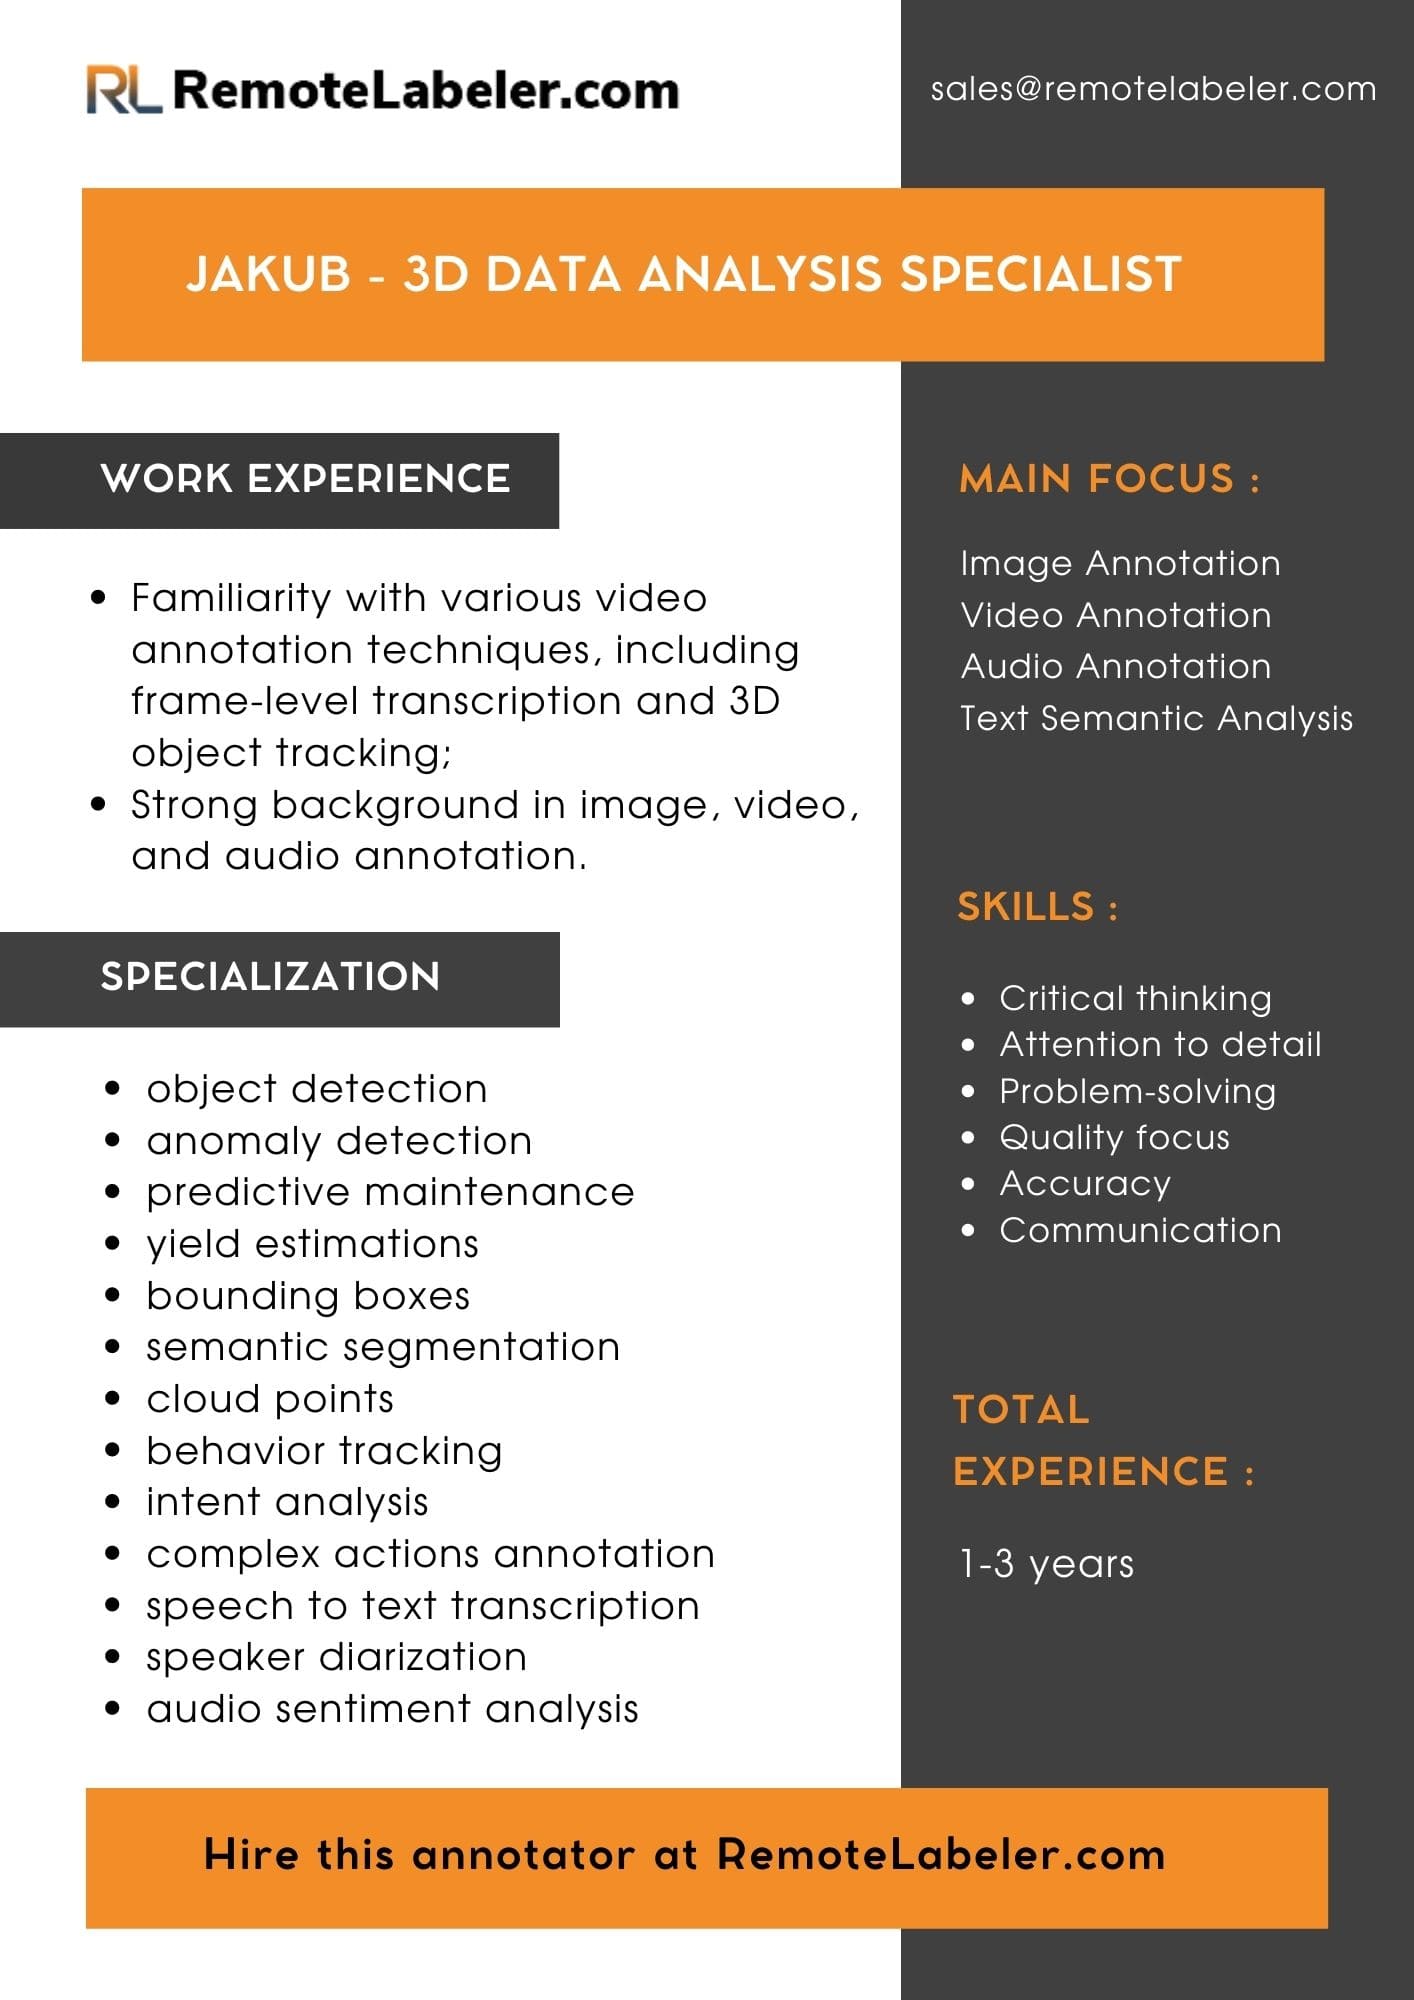 jakub-3d-data-analysis-specialist